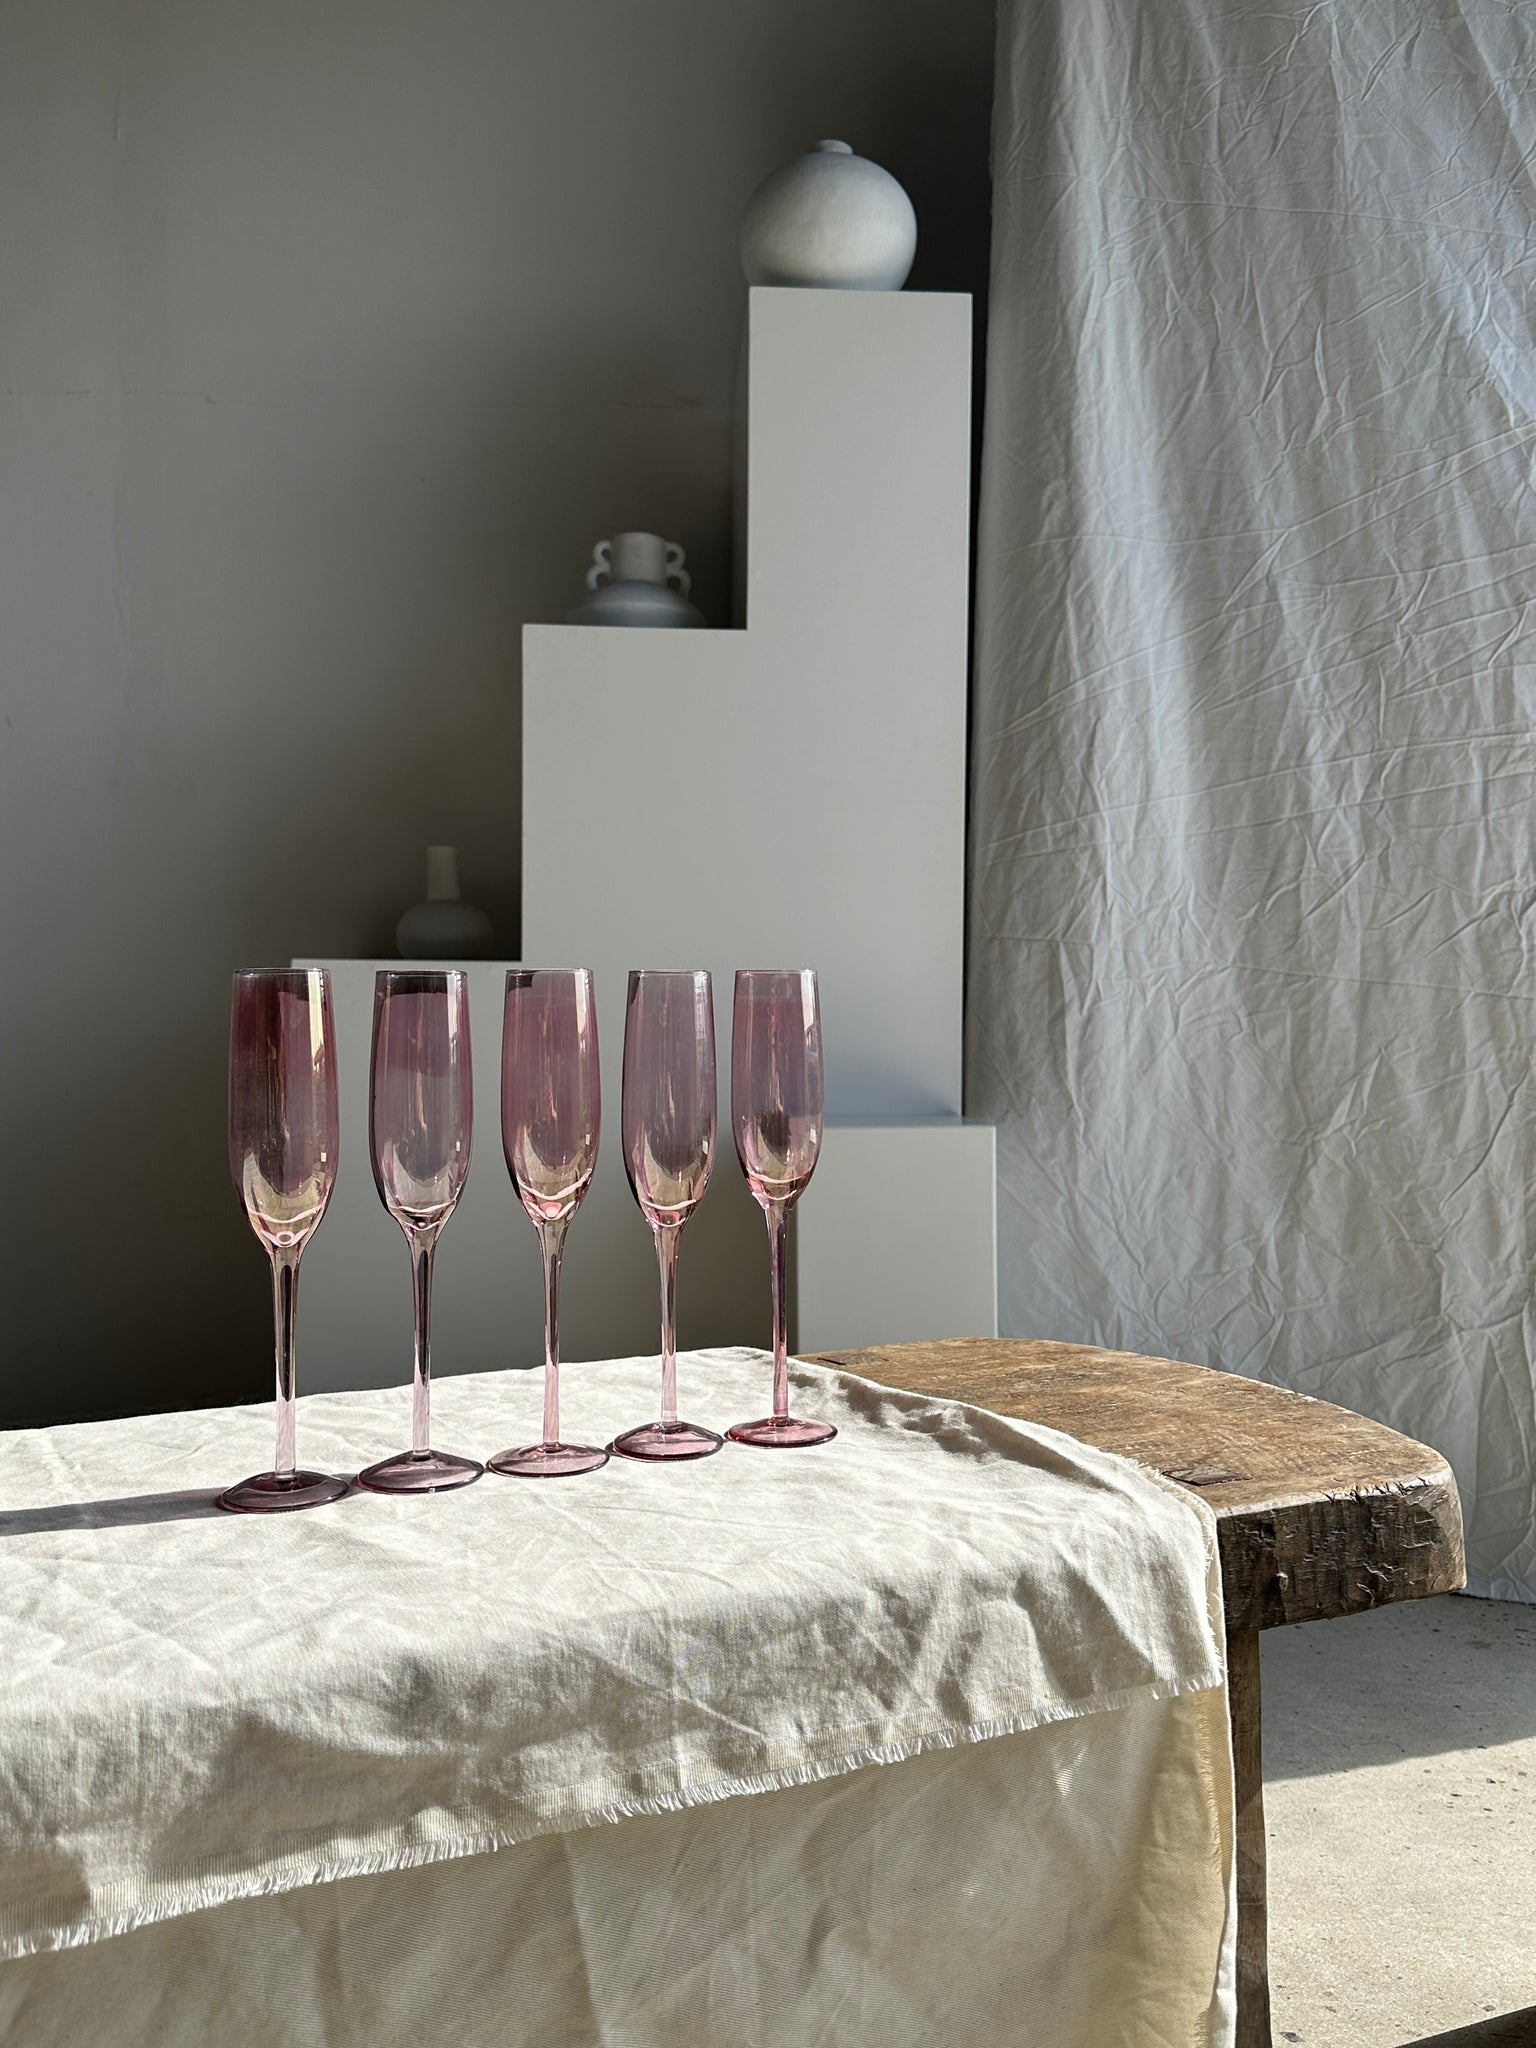 5 grandes flûtes à champagne rosées